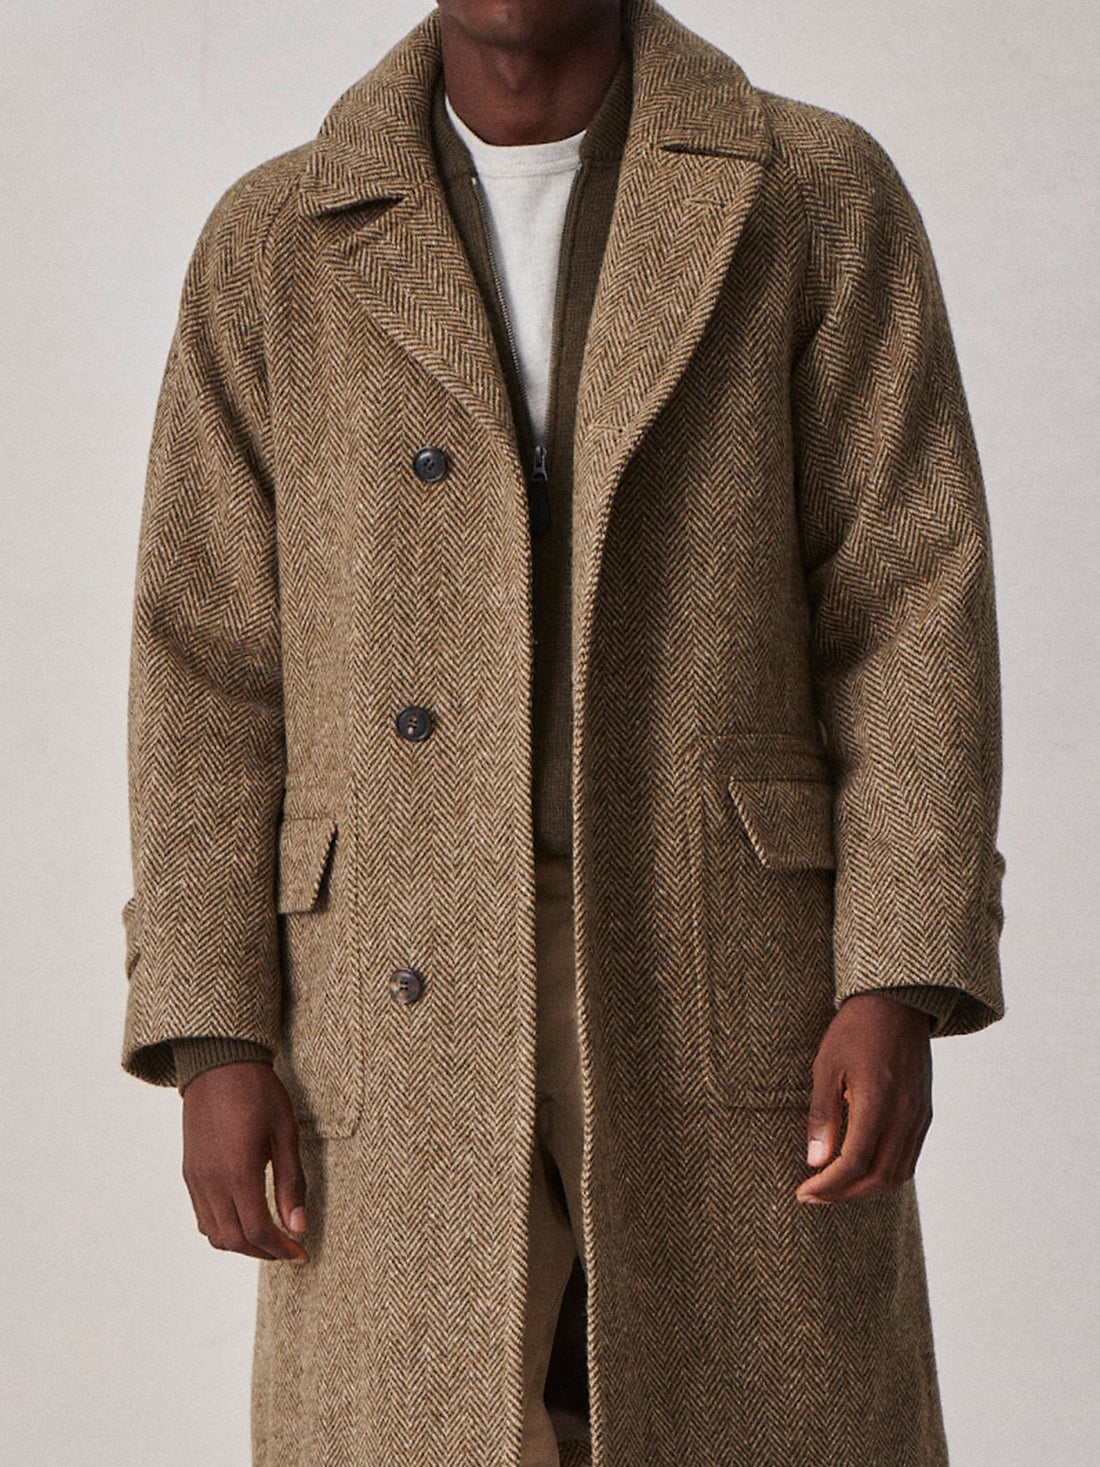 1930s Men’s Coat and Jacket Styles DONEGAL CHEVRON TWEED BALMACAAN COAT buck mason  AT vintagedancer.com